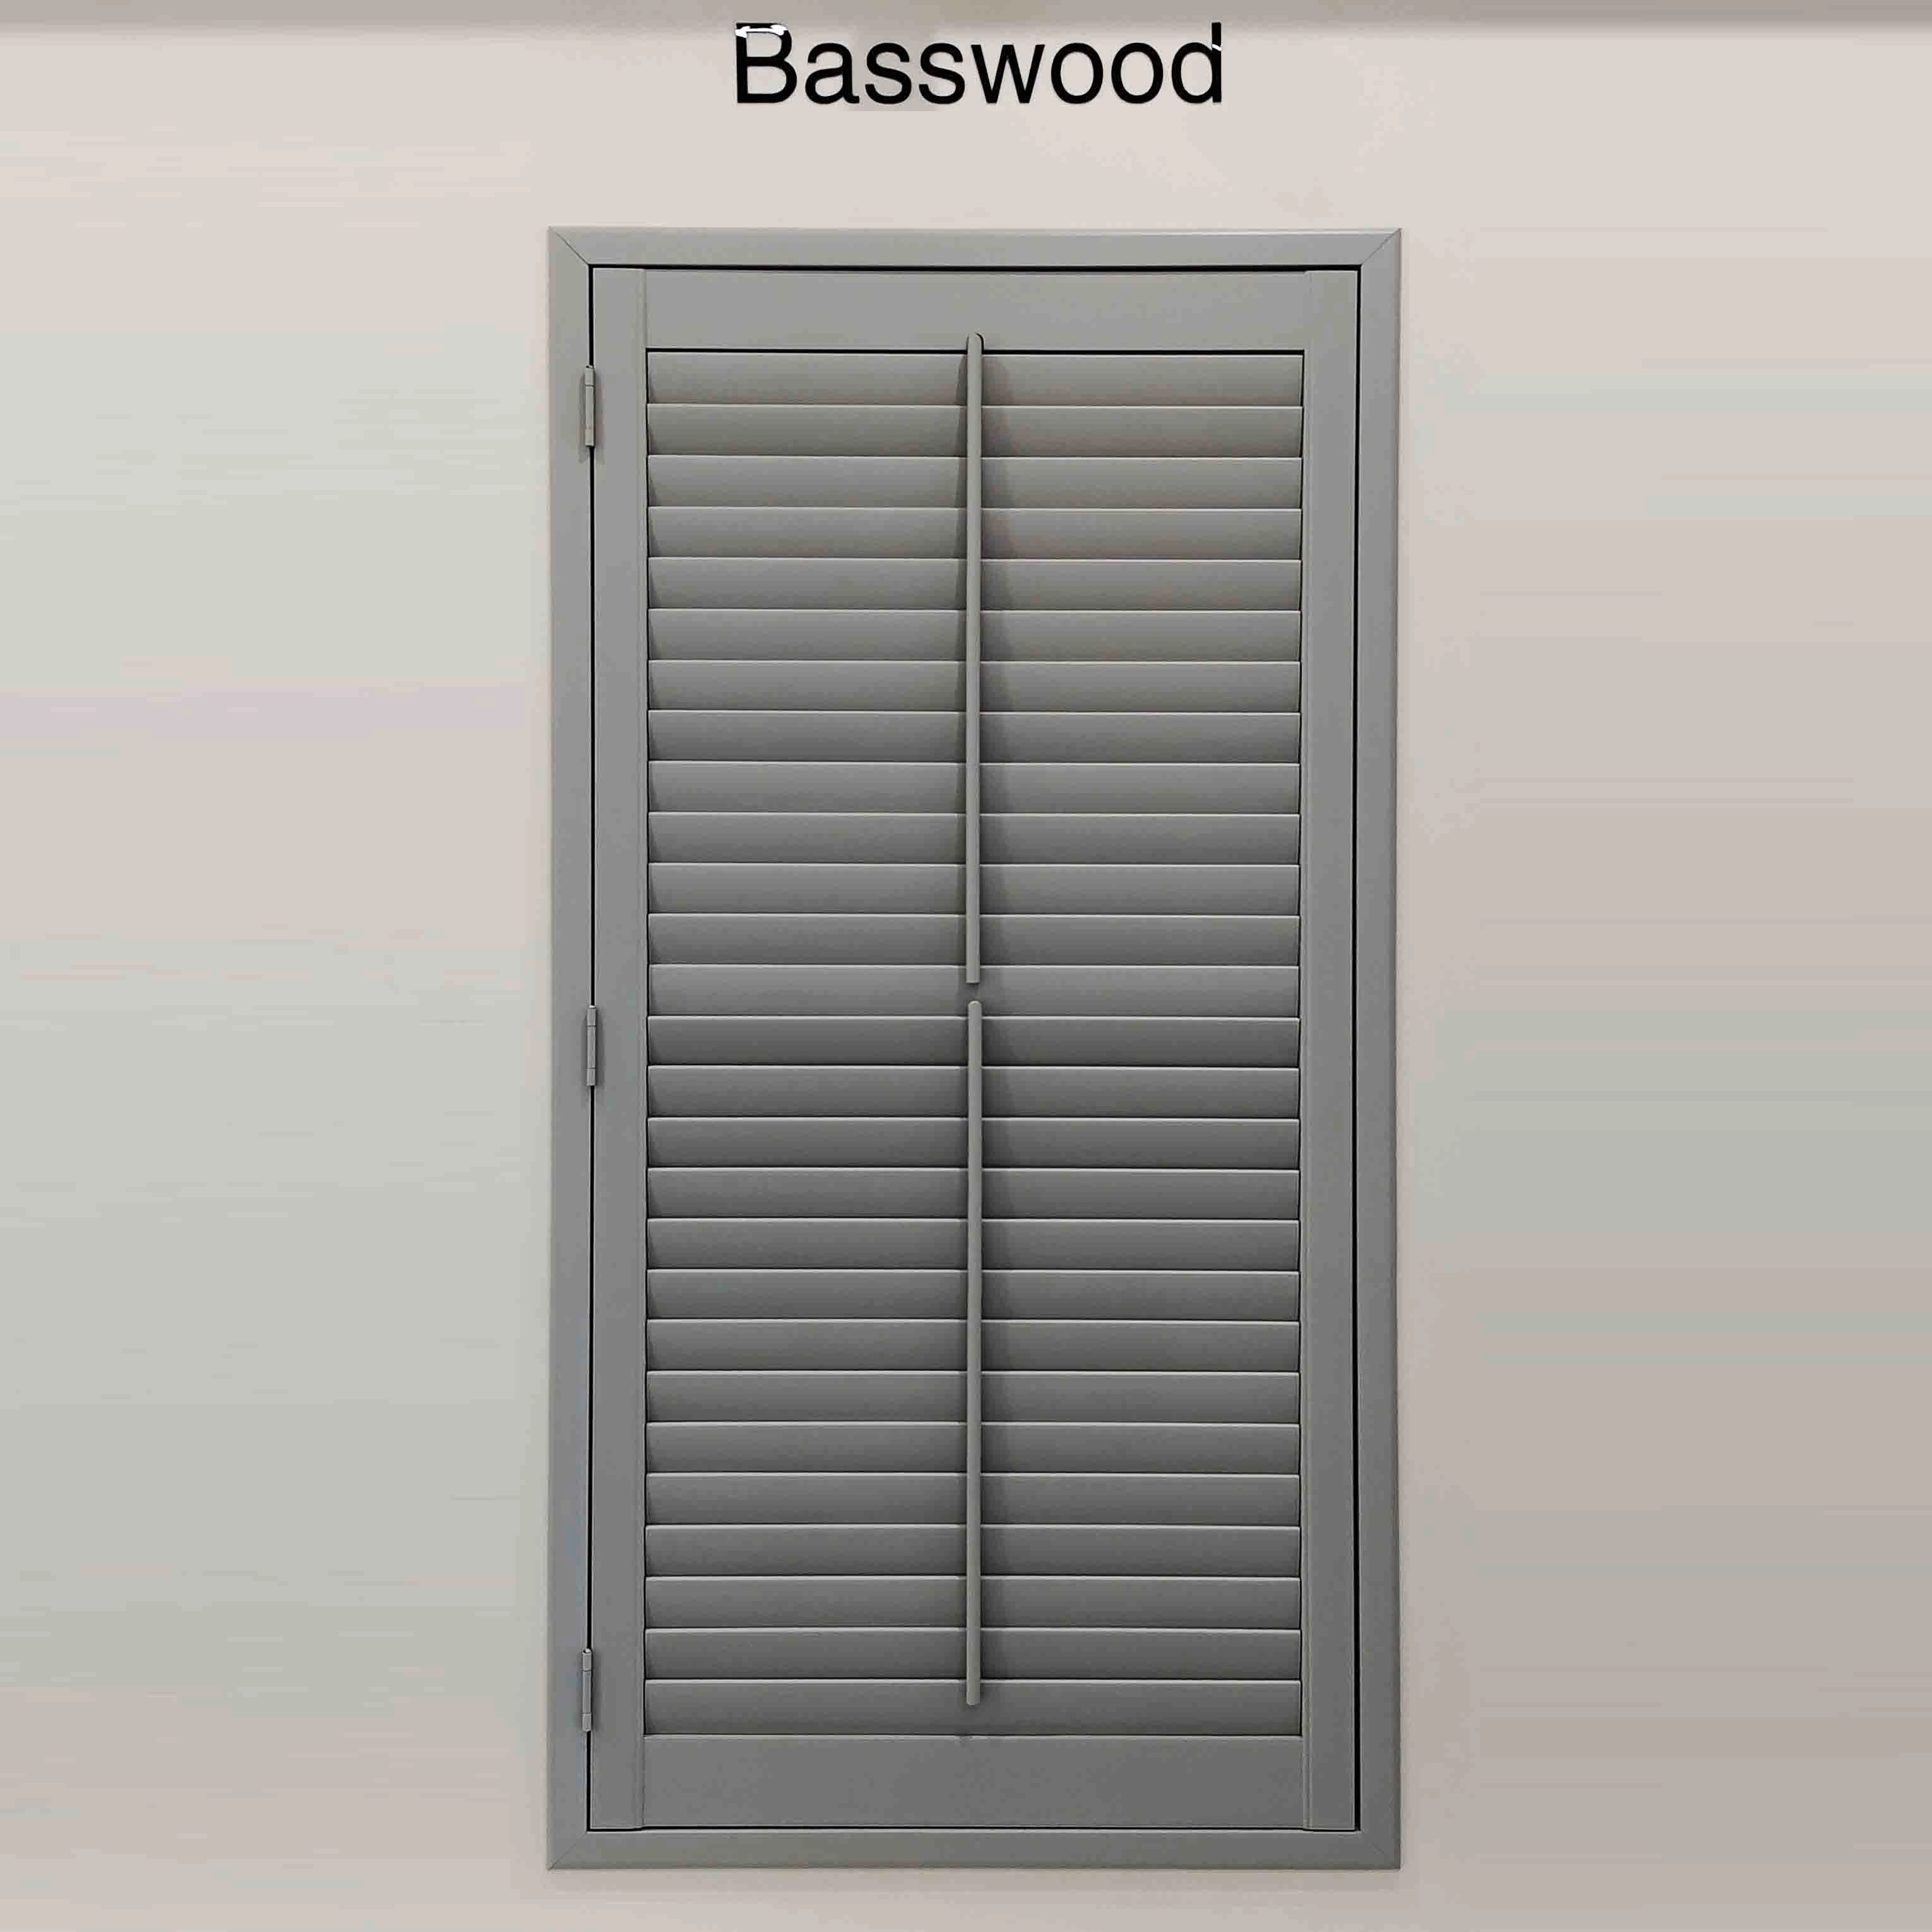 China Basswood window shutter supplier,middle rod shutter manufacturer